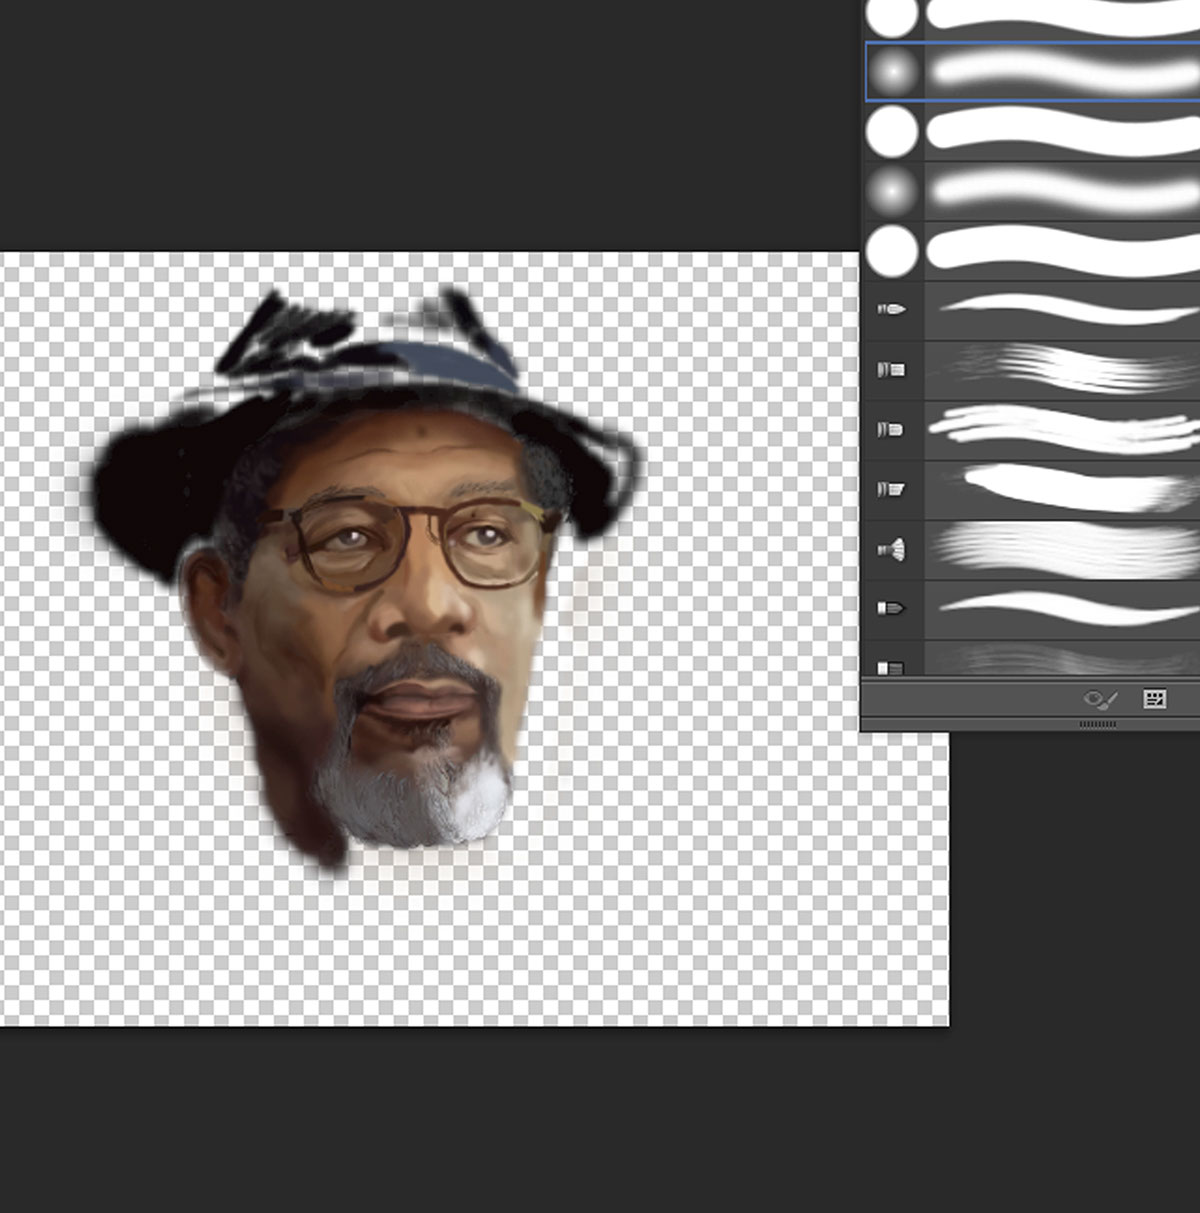 Morgan Freeman digital painting